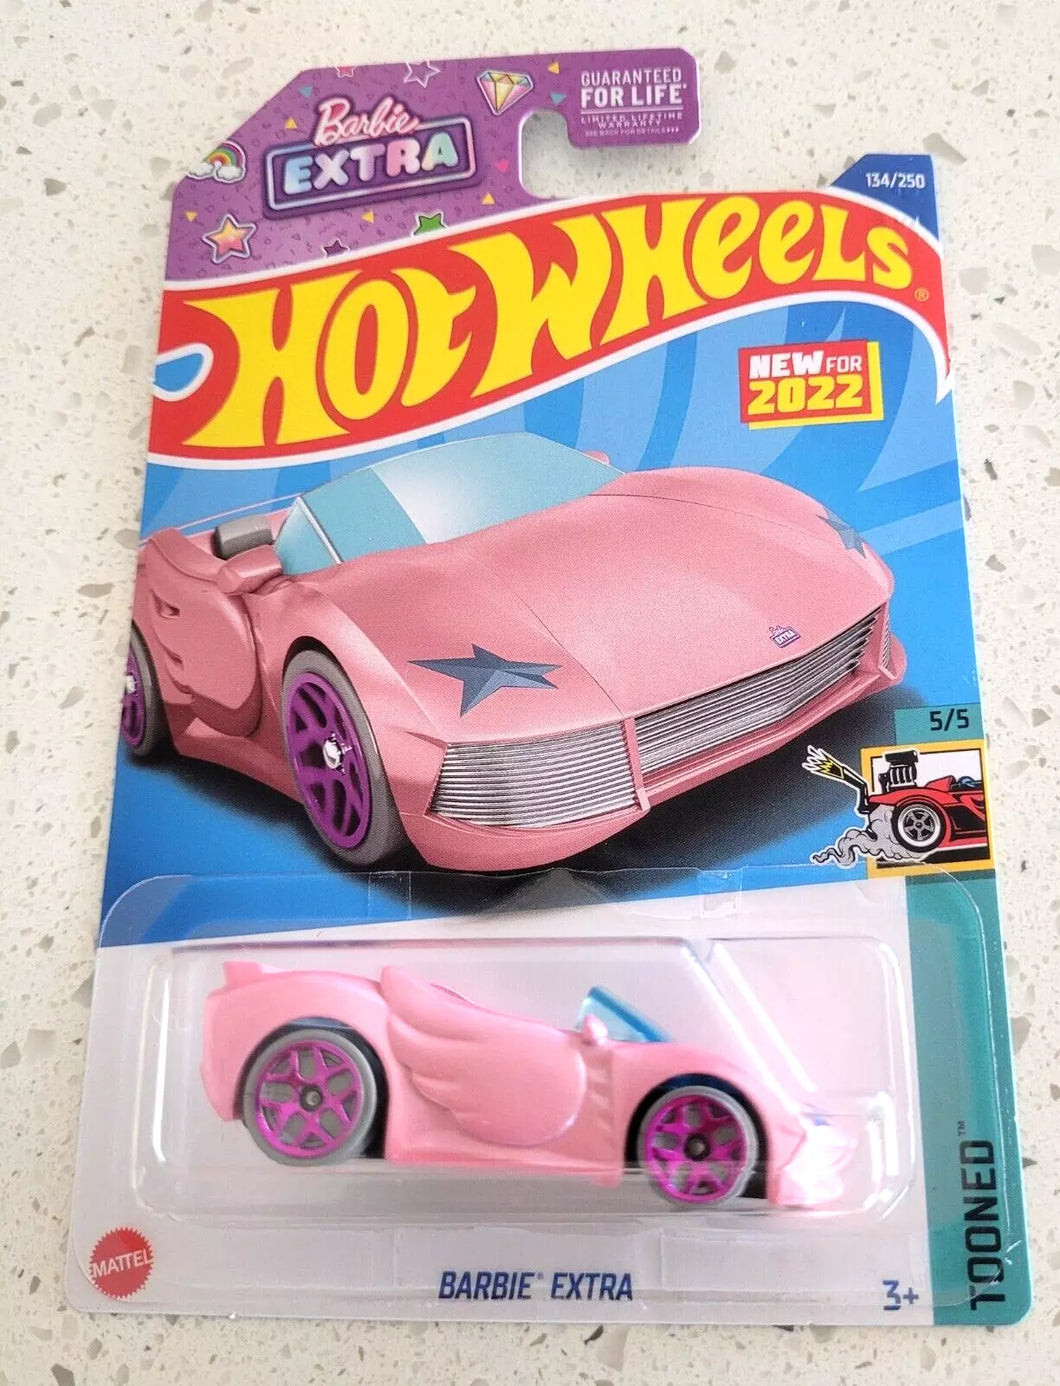 Hot wheels Barbie Extra Pink #134 134/250 2022 Tooned 5/5